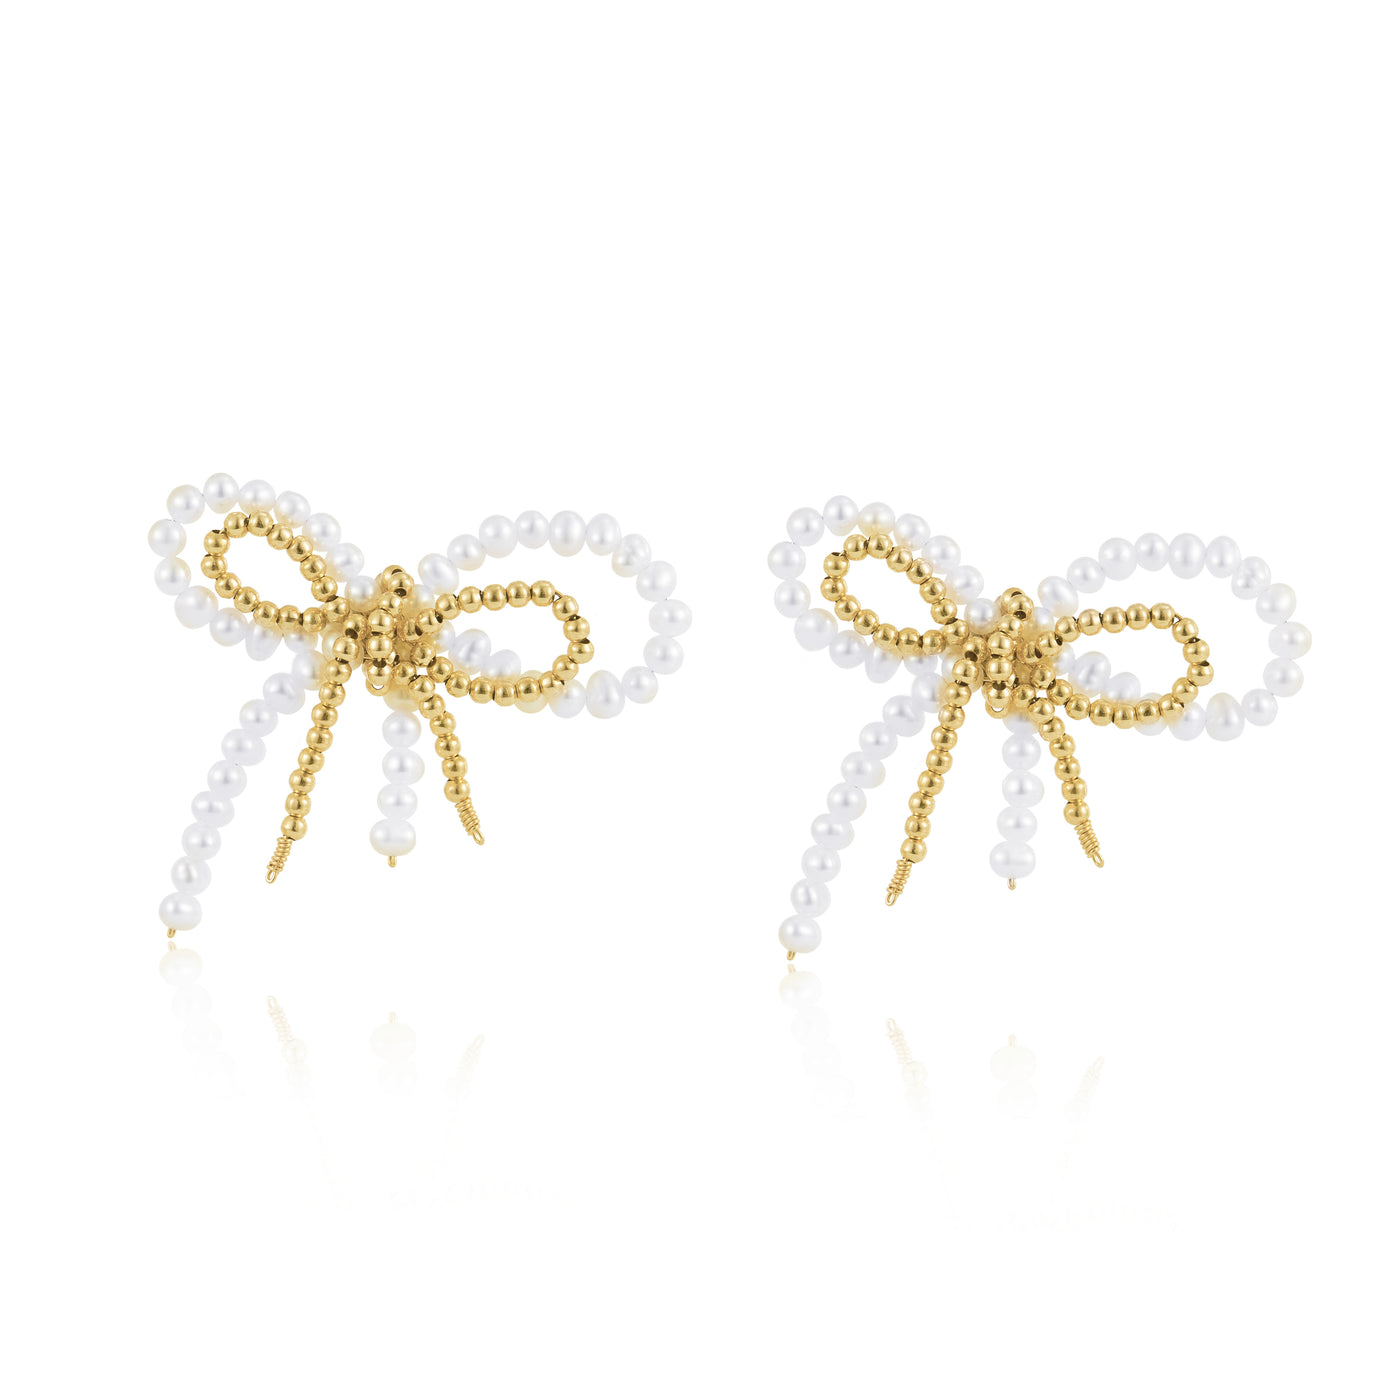 COCO Kim Star Series Bowknot stud earrings